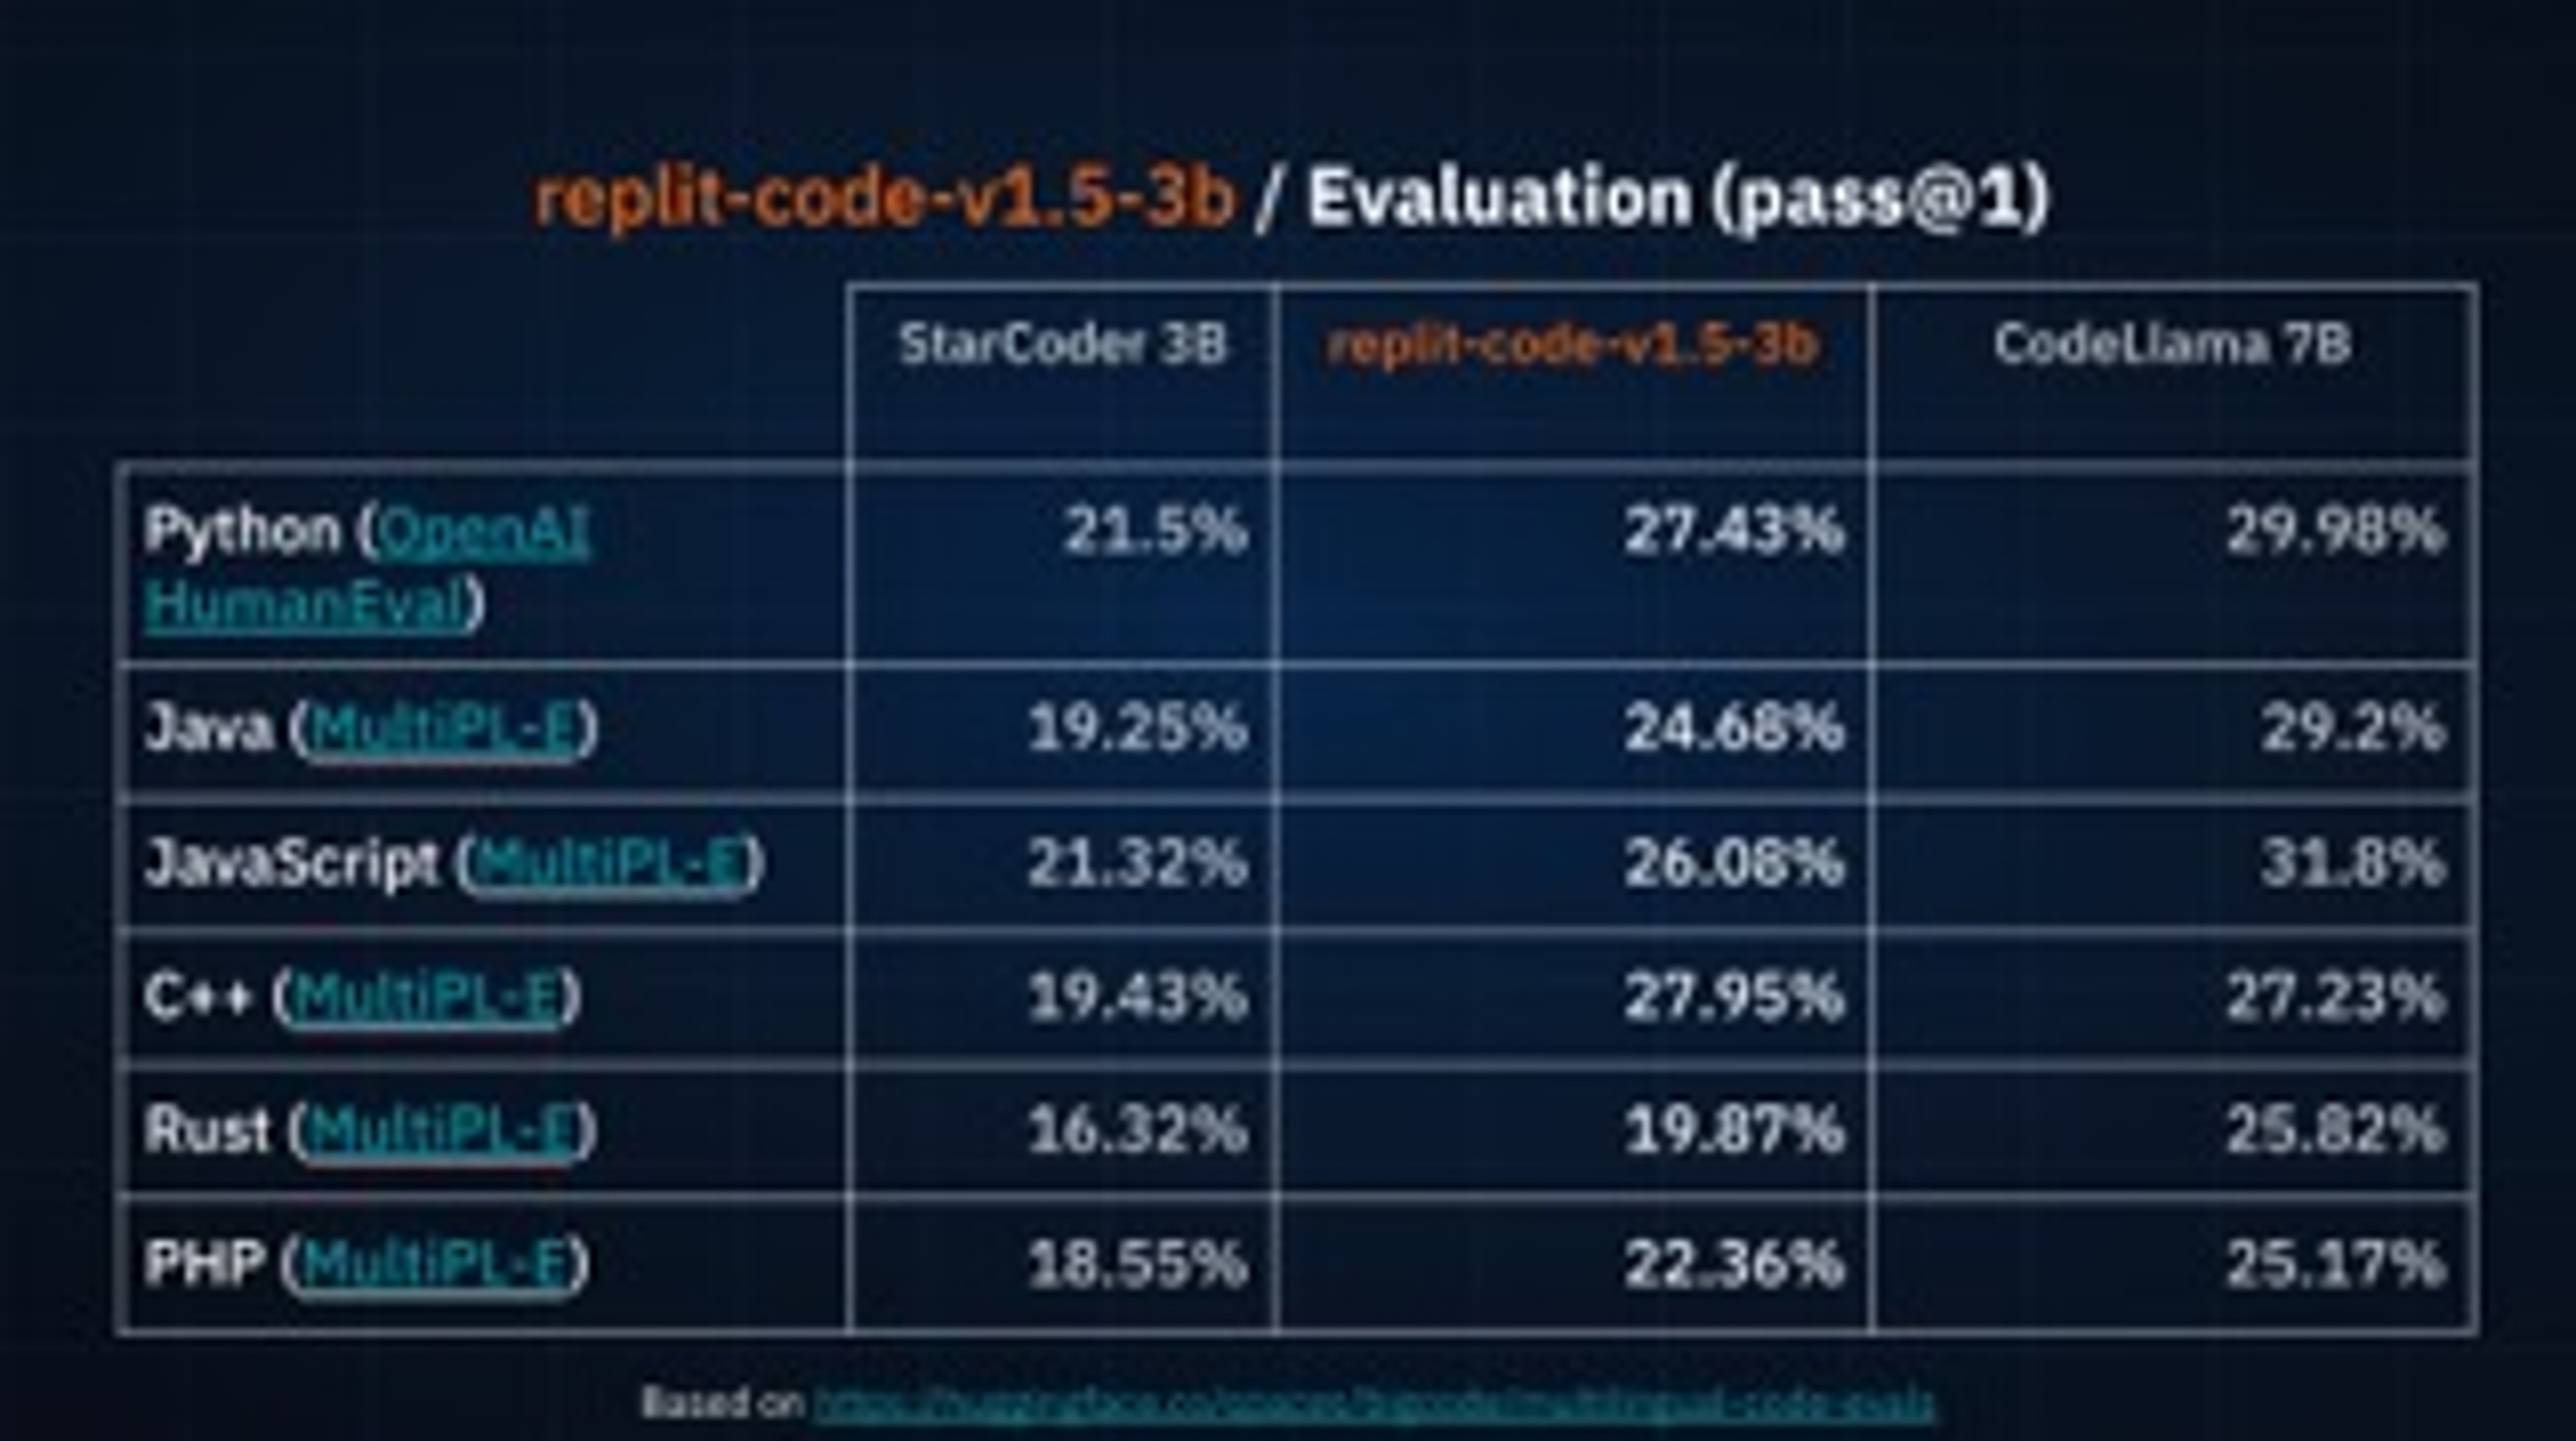 Comparing Replit v1.5-3b to leading benchmarks